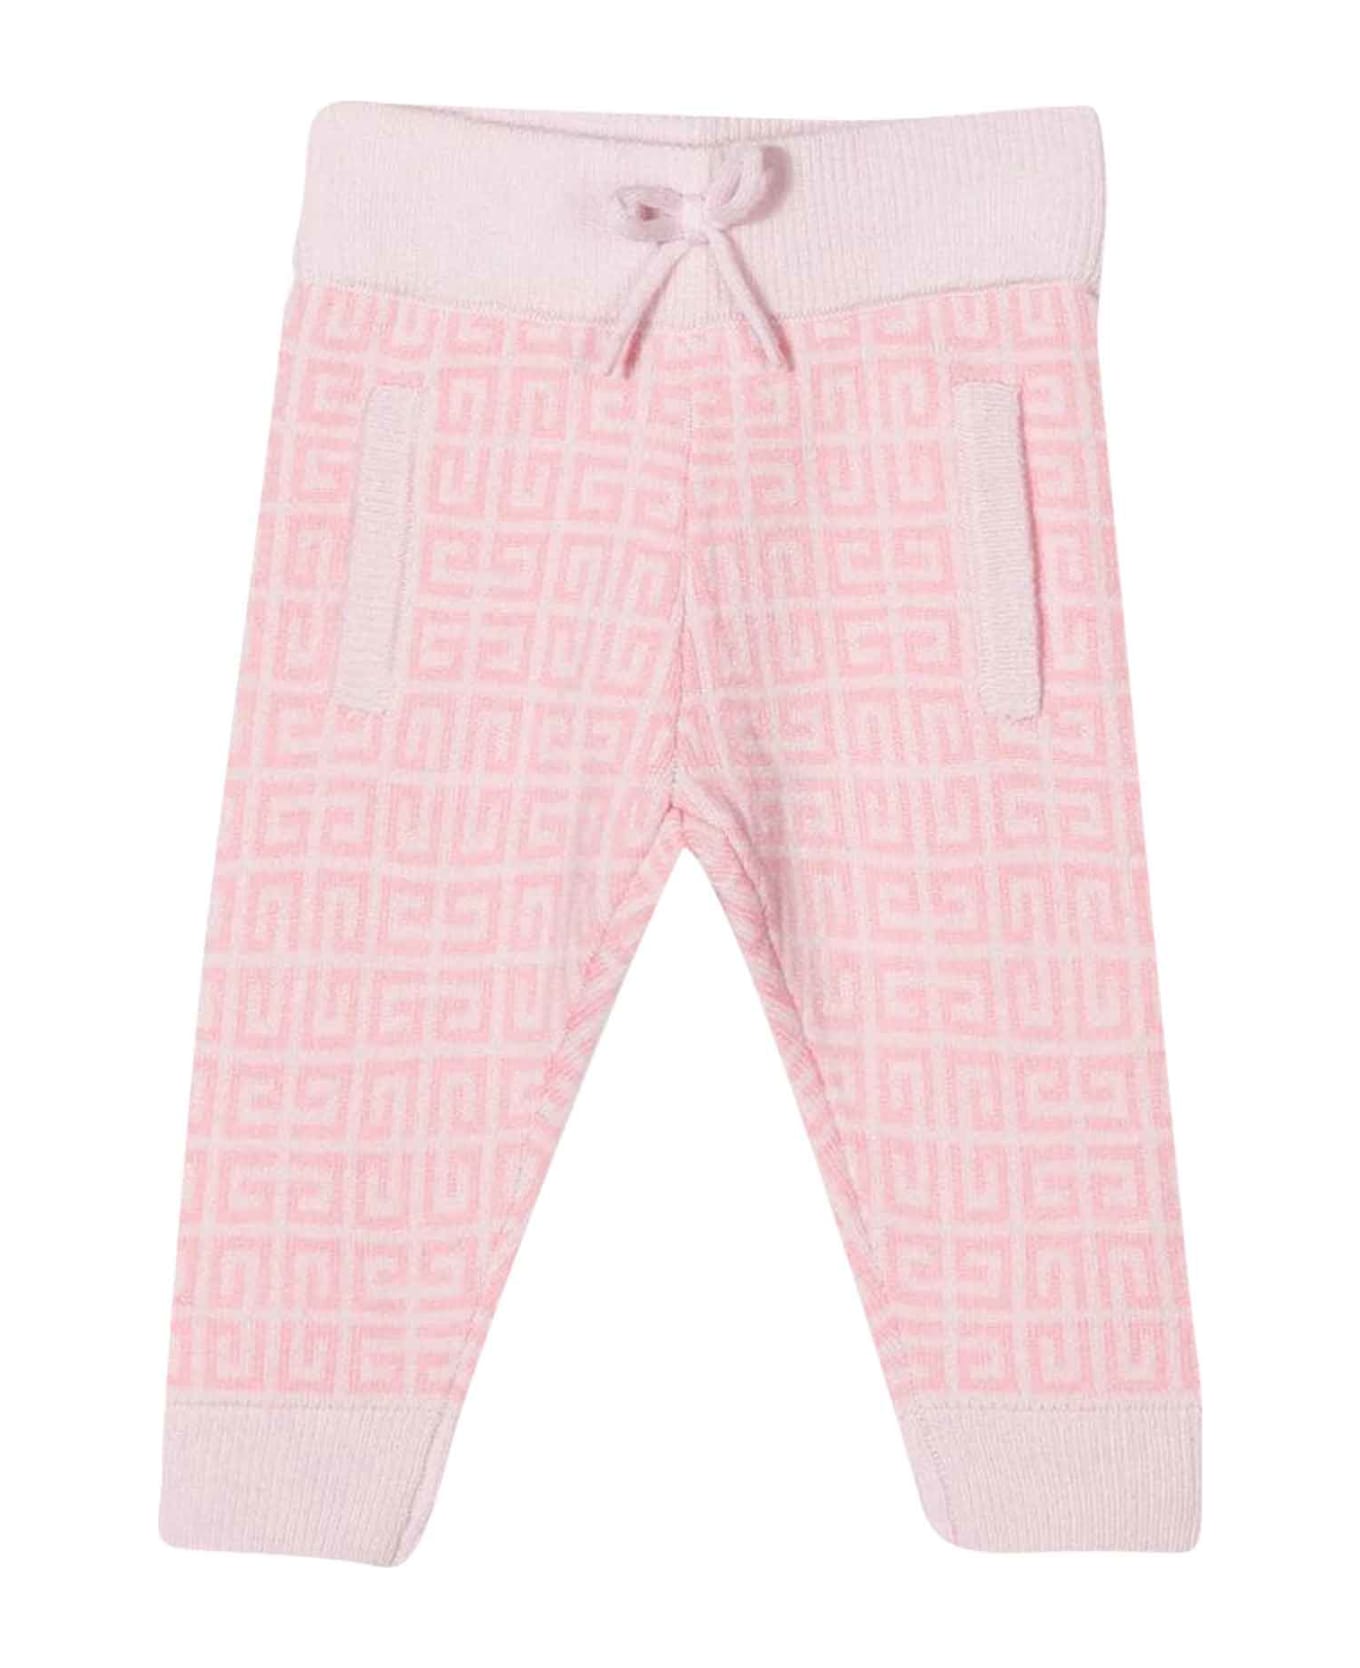 Givenchy Pink Leggings Baby Girl - Rosa